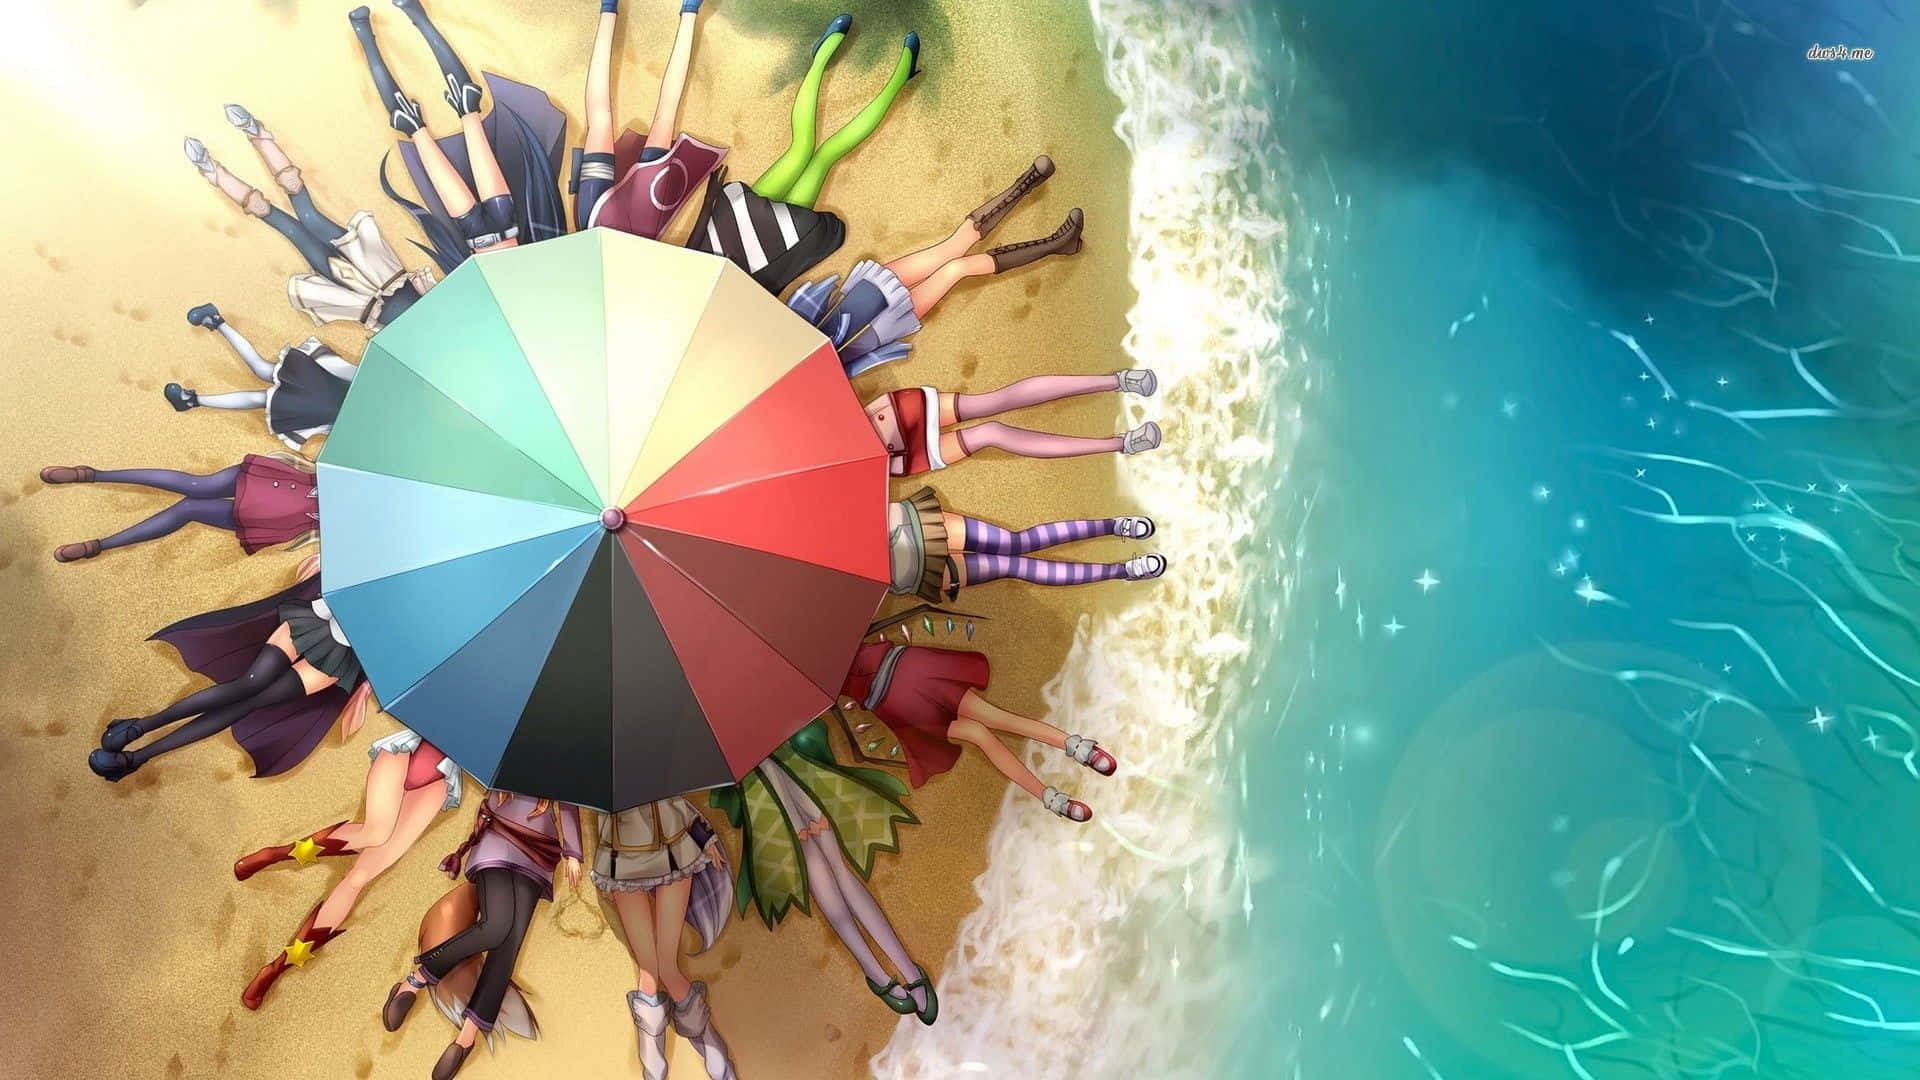 Tropical Beach Escape with Vibrant Umbrella Wallpaper